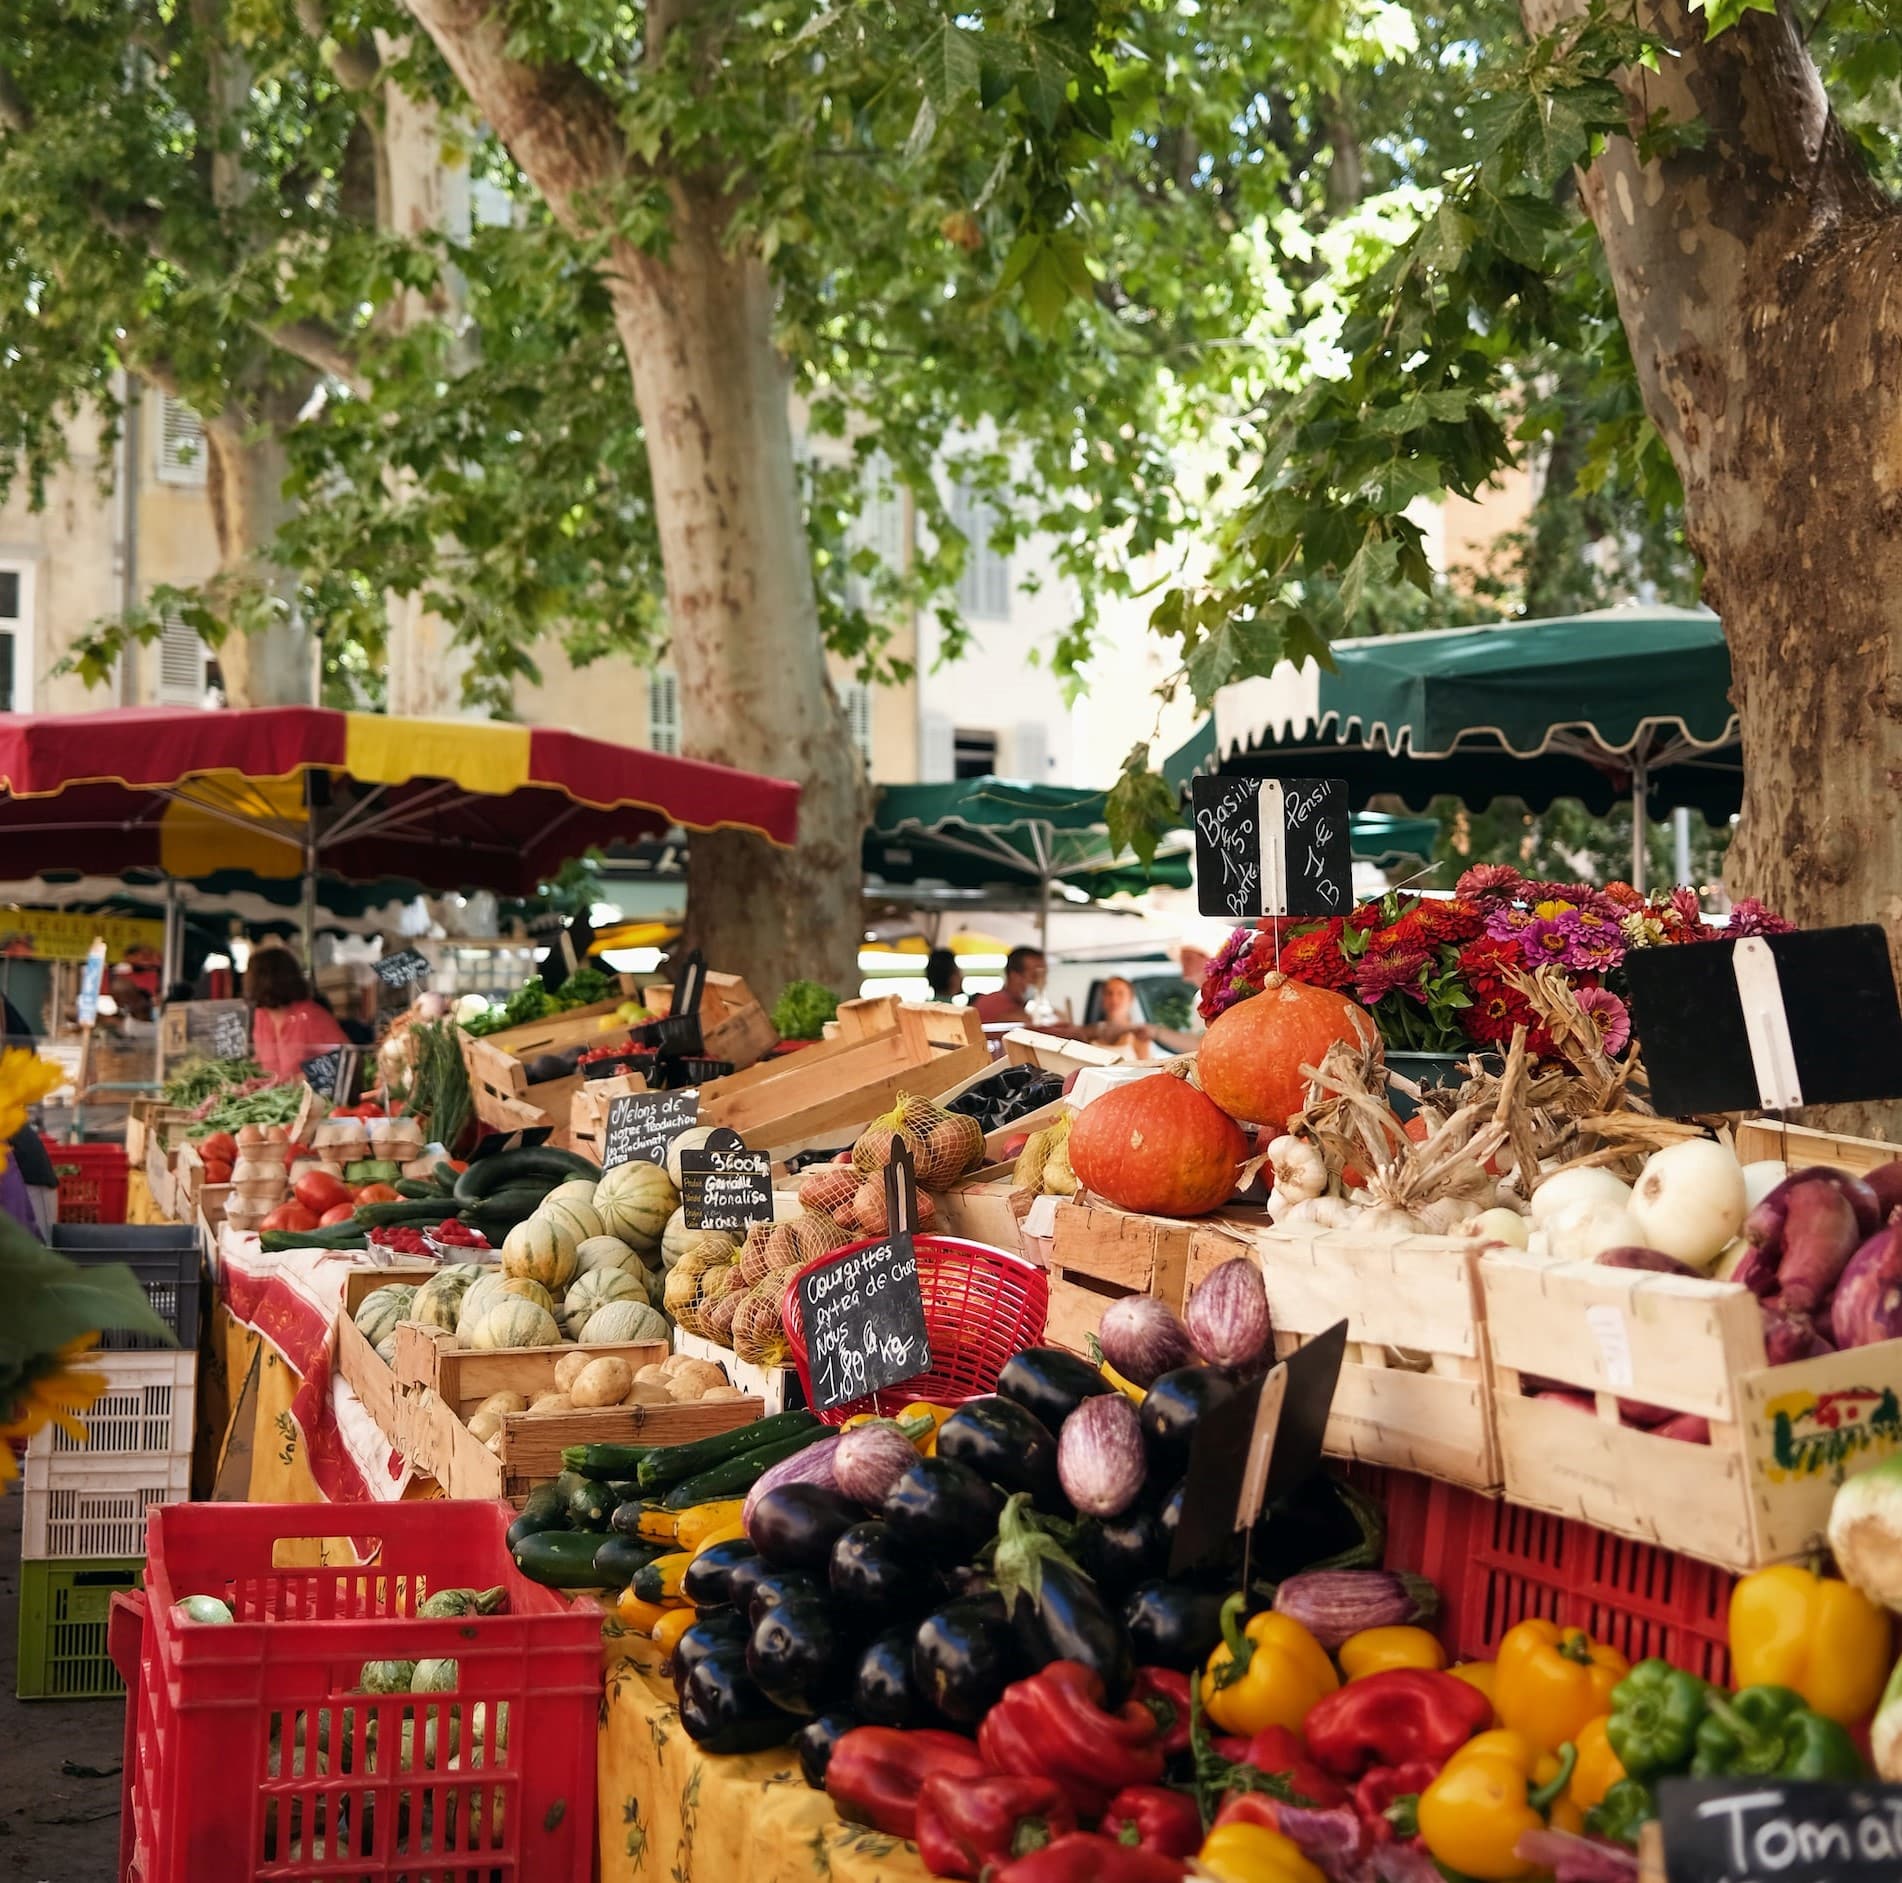 Farmers market in Provence